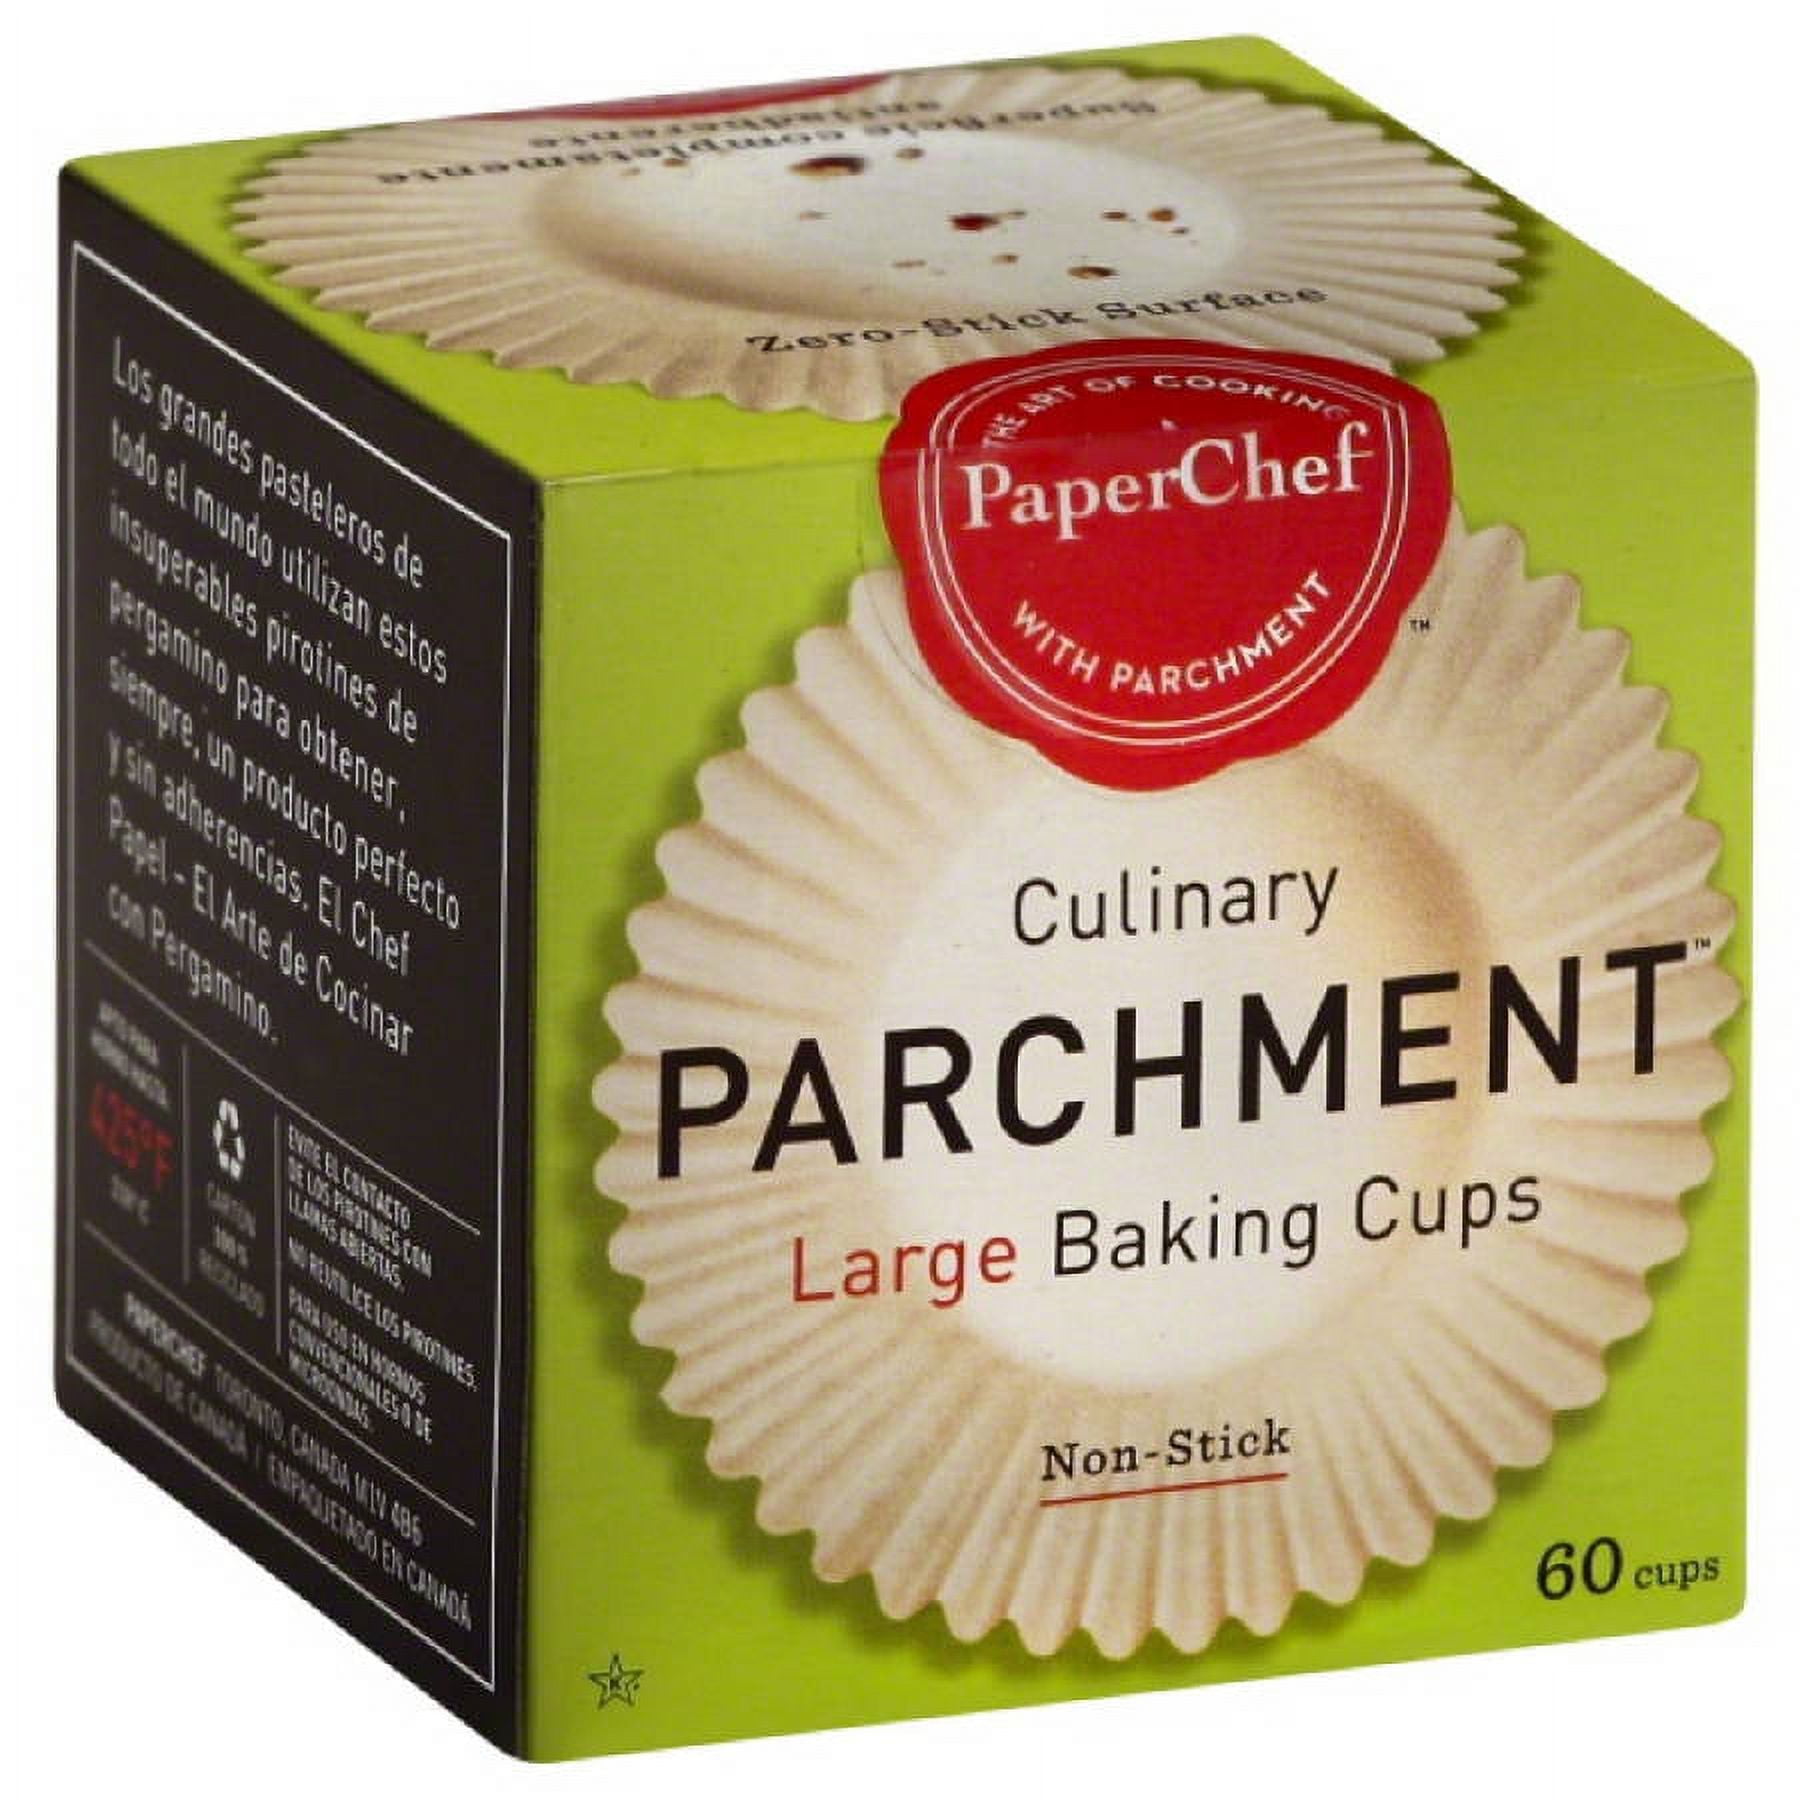  PaperChef Culinary Parchment Cooking Bags, 10-ct: Parchent Bags:  Home & Kitchen